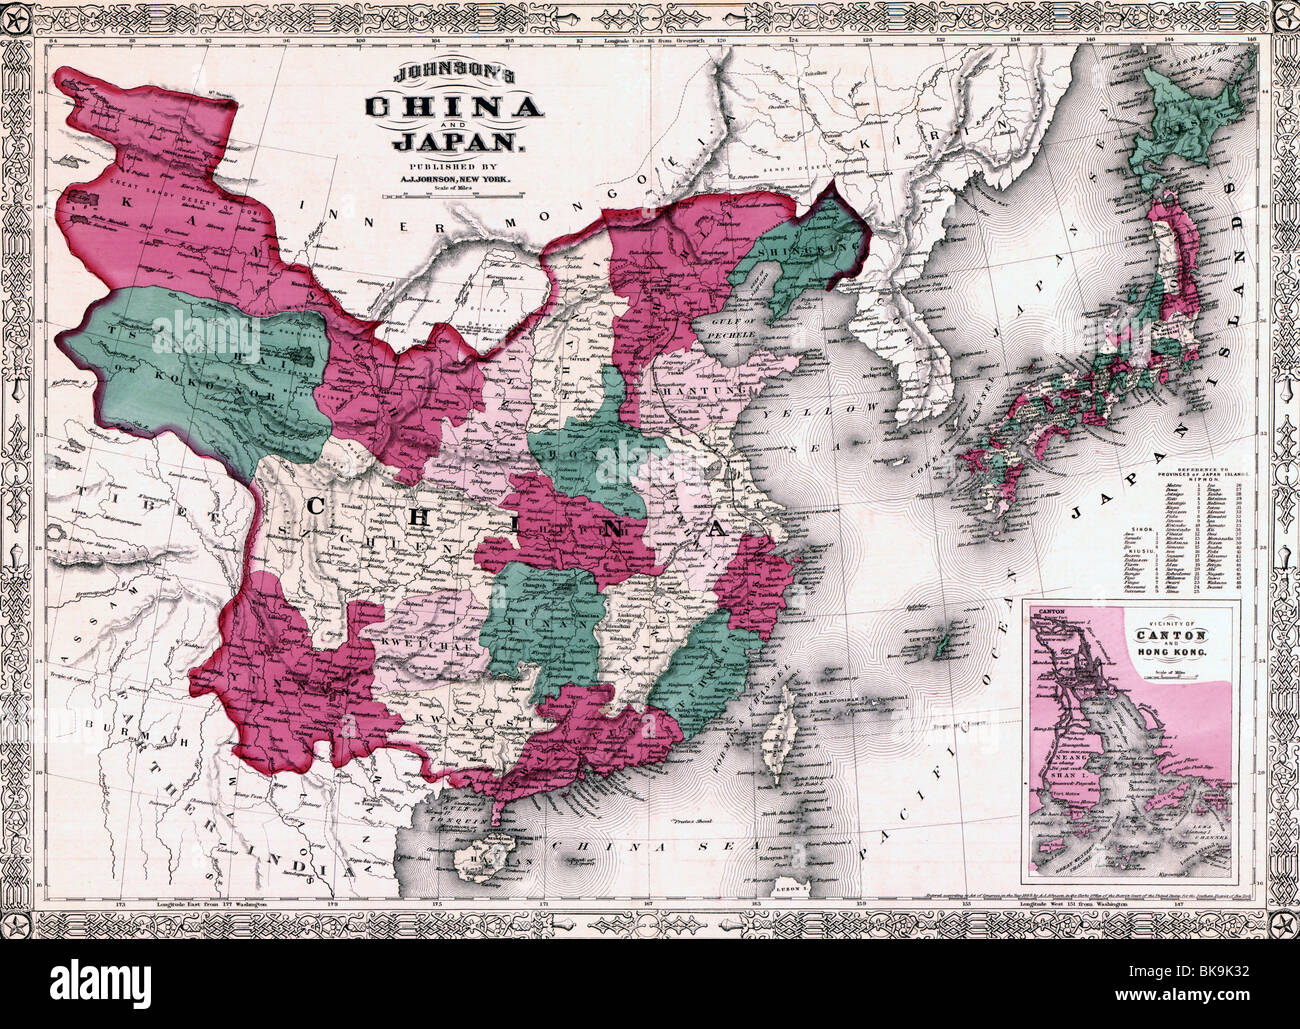 China and Japan Map, 1869 Stock Photo